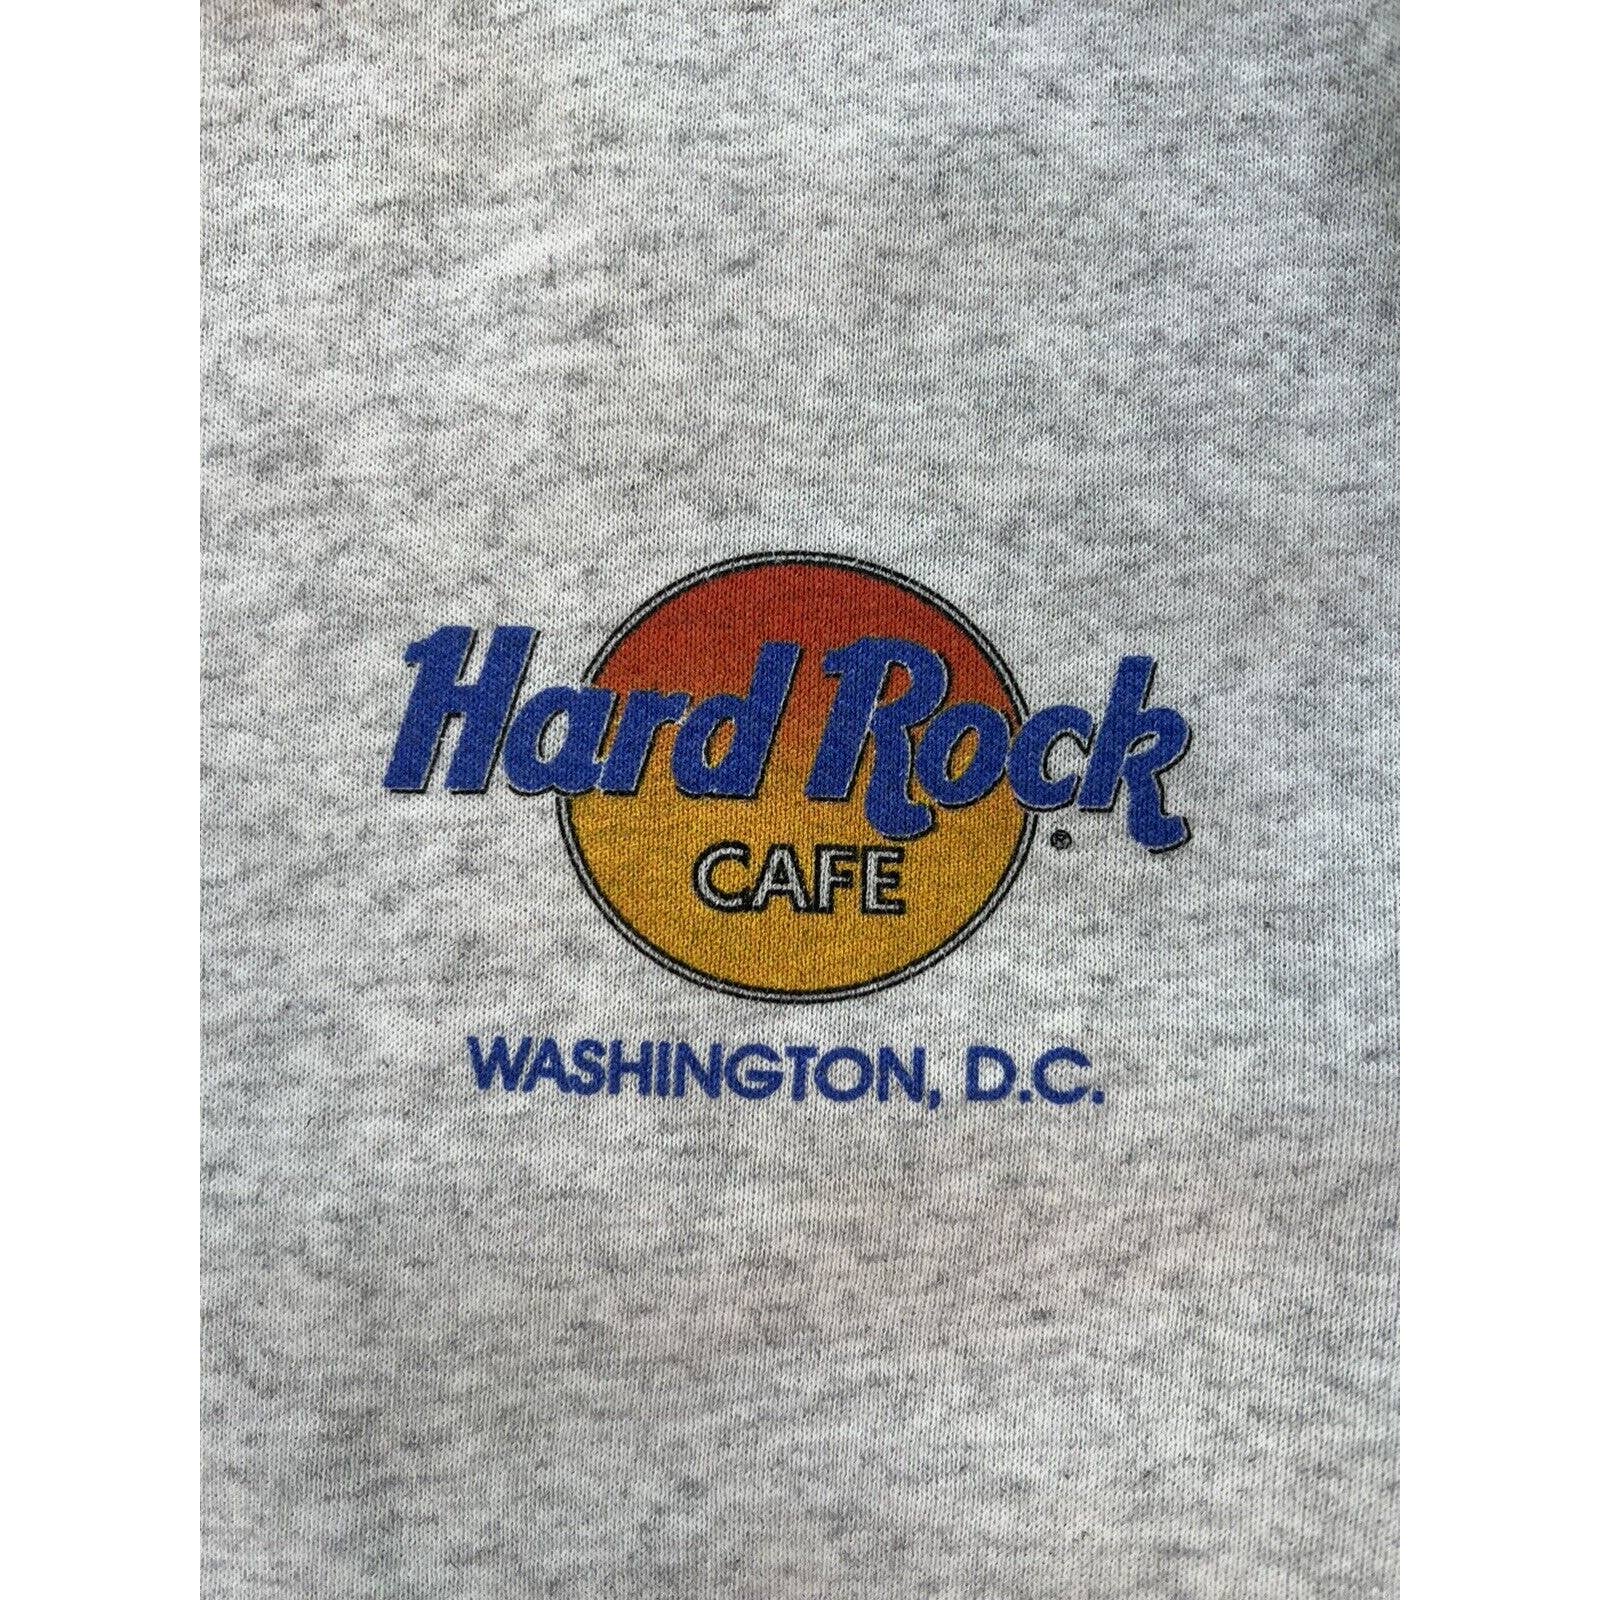 Hard Rock Cafe Sweatshirt Size Medium Washington DC All Is One Crewneck Gray